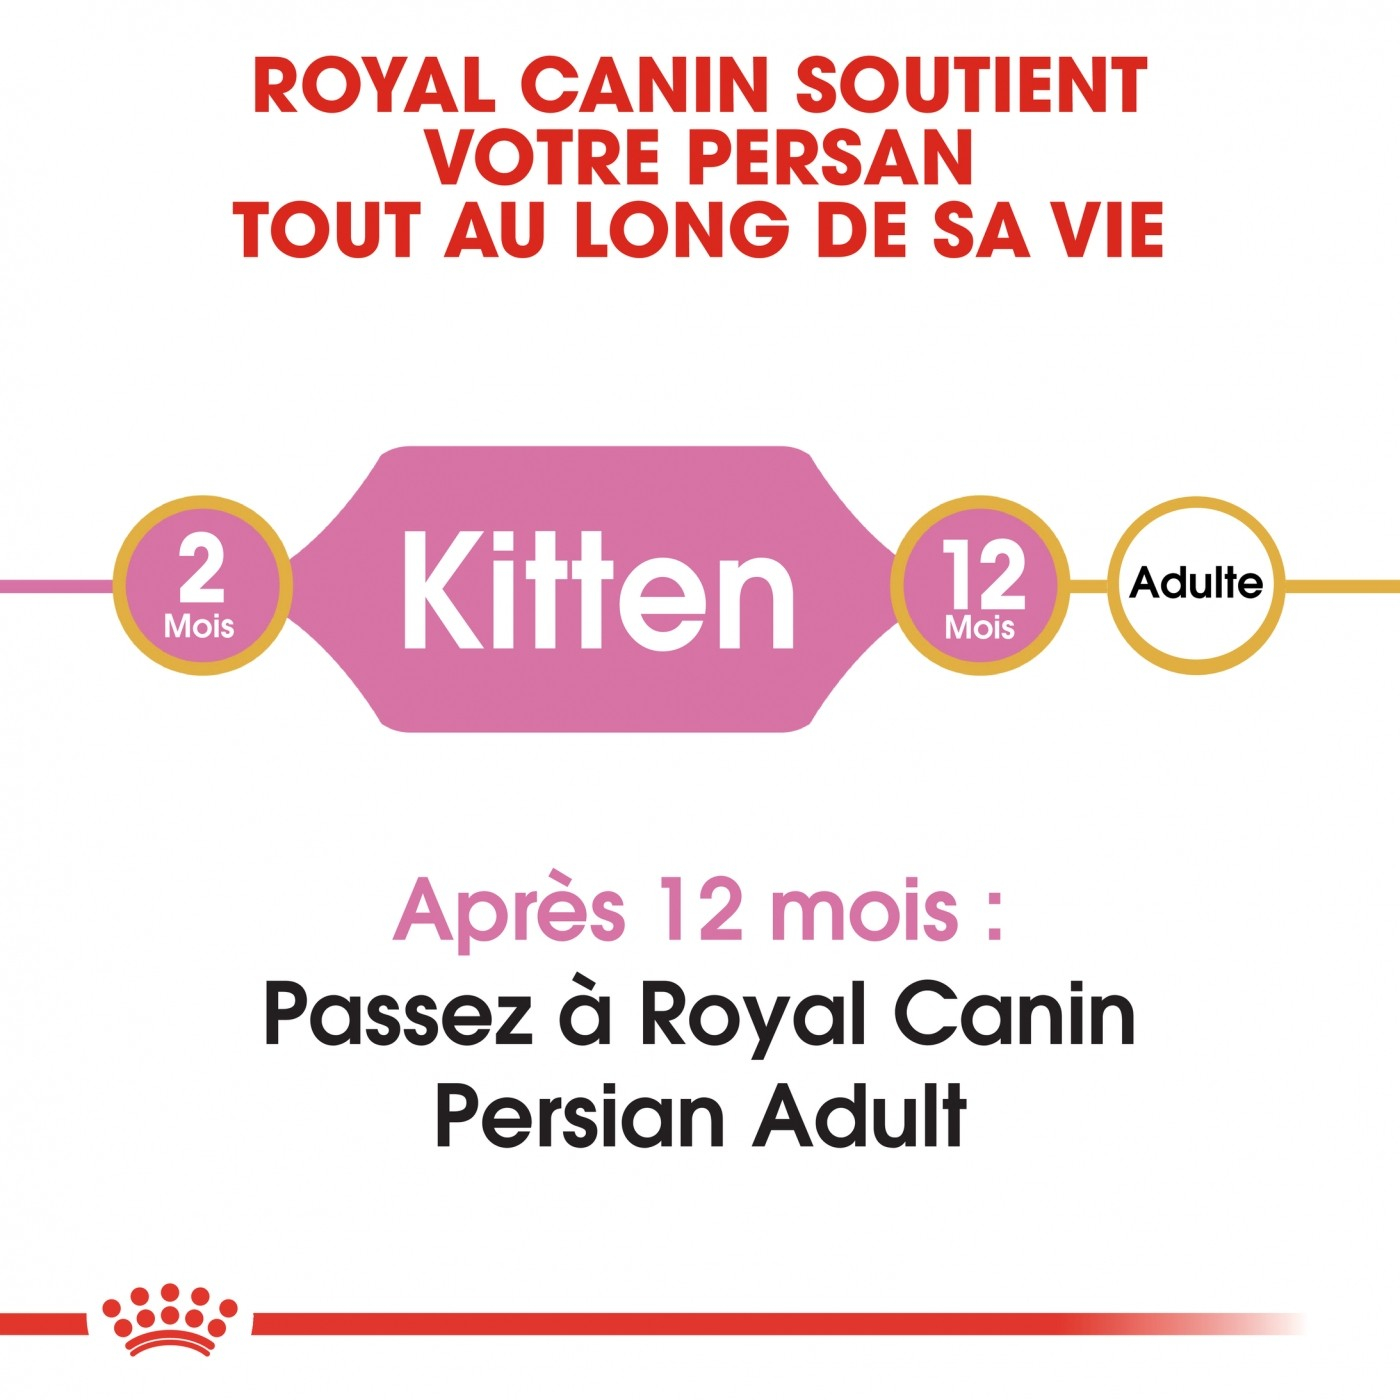 Royal Canin Kitten Persian Pienso para gatitos persas